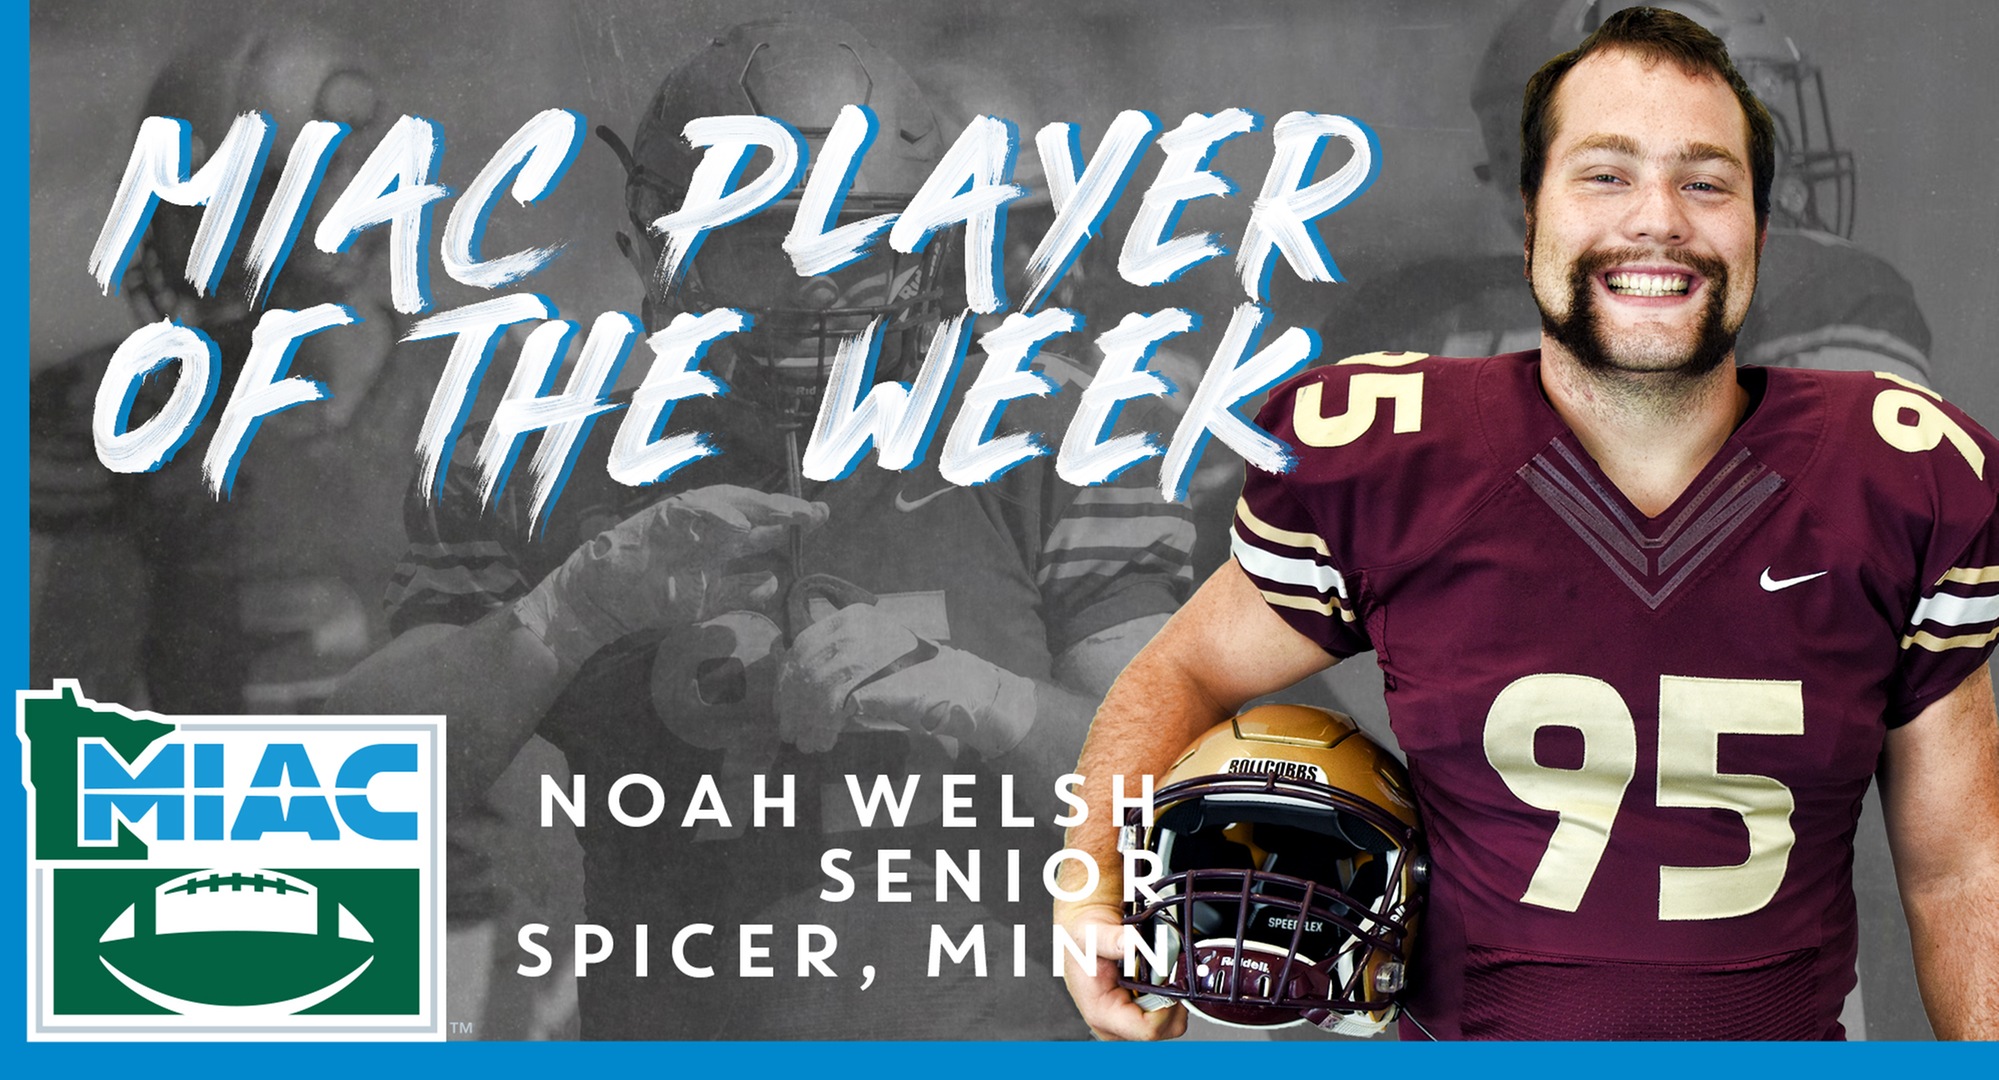 Senior Noah Welsh was named the MIAC Defensive Player of the Week.